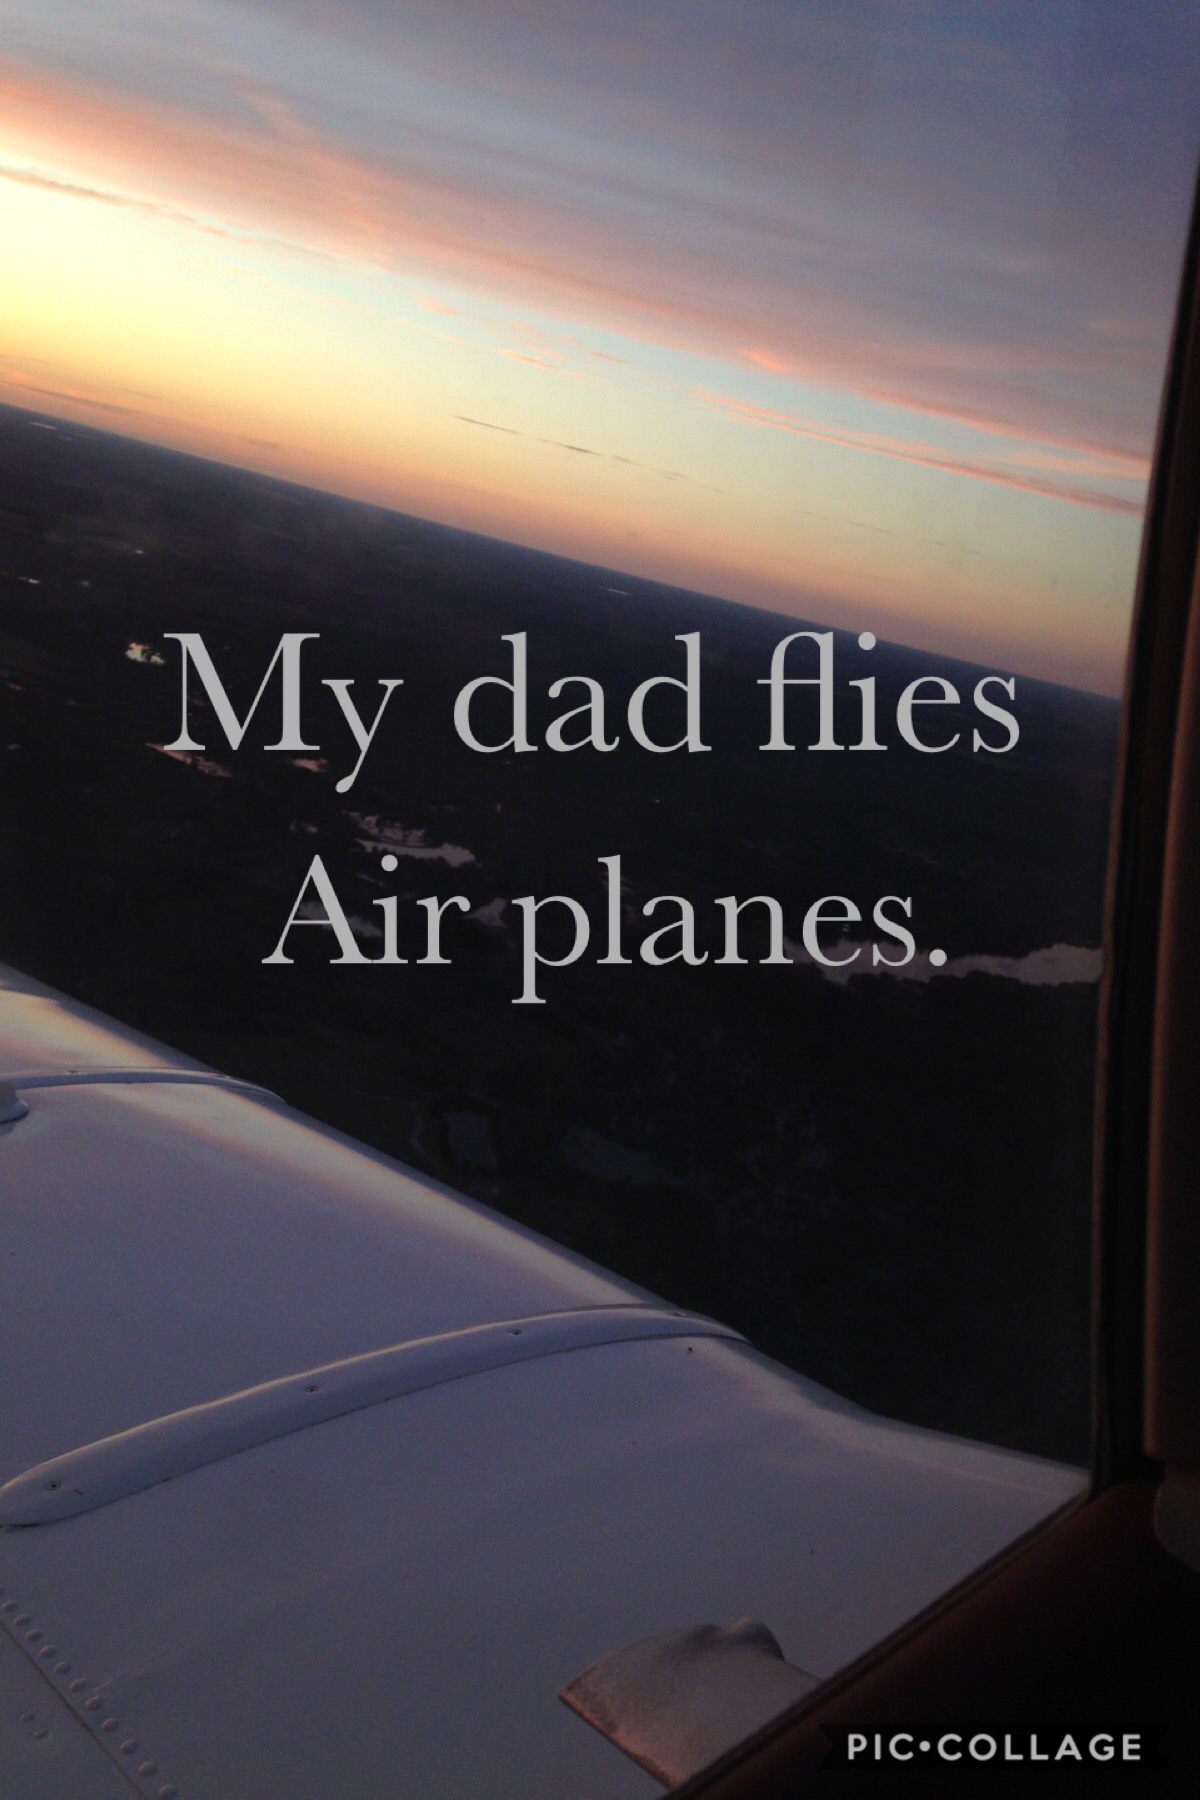 Fliing air planes ✈️✈️